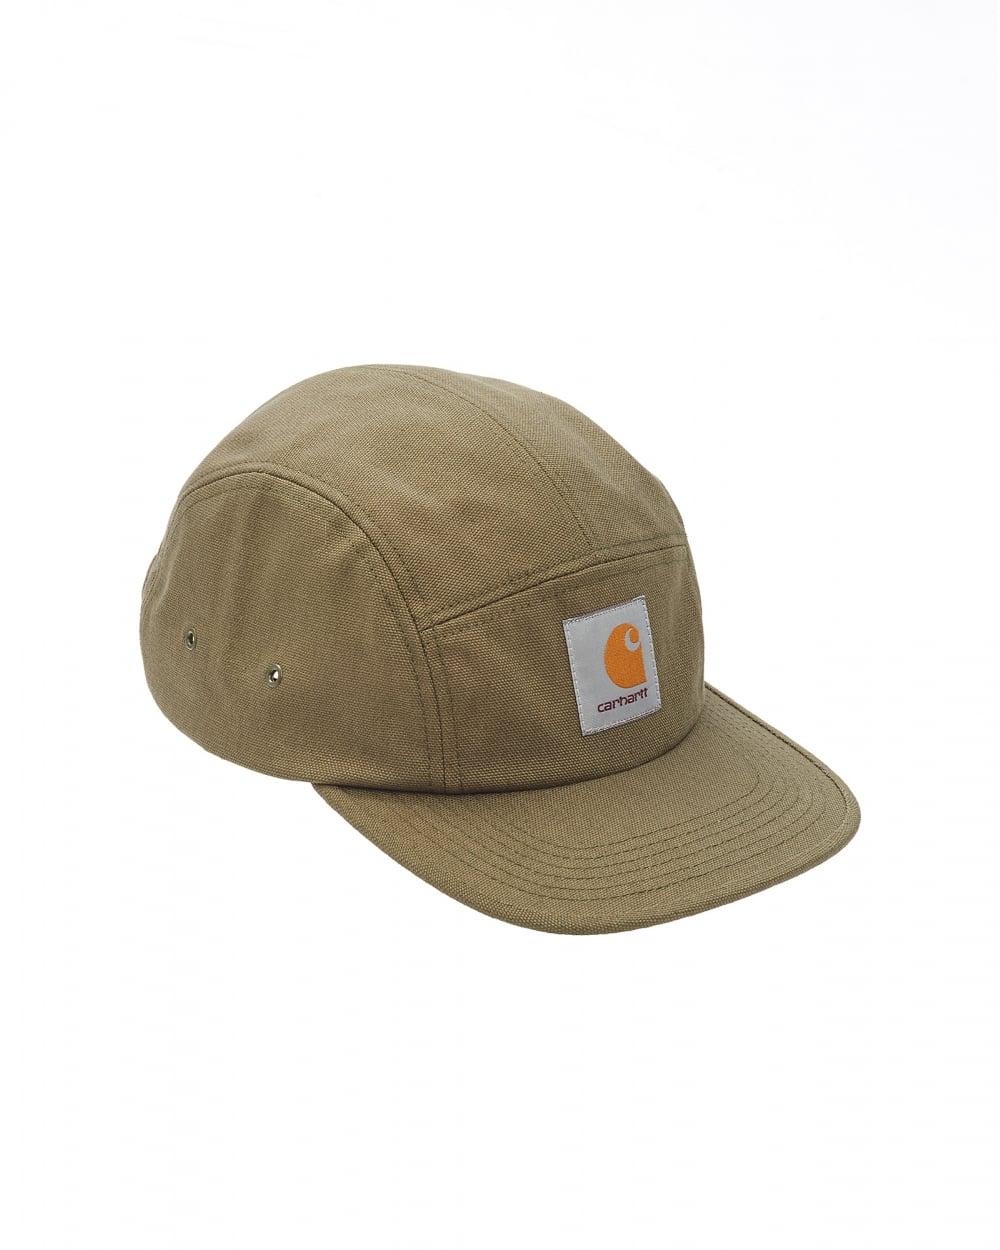 Tan and Green Logo - Carhartt Mens Hat, Olive Green Logo Baseball Cap